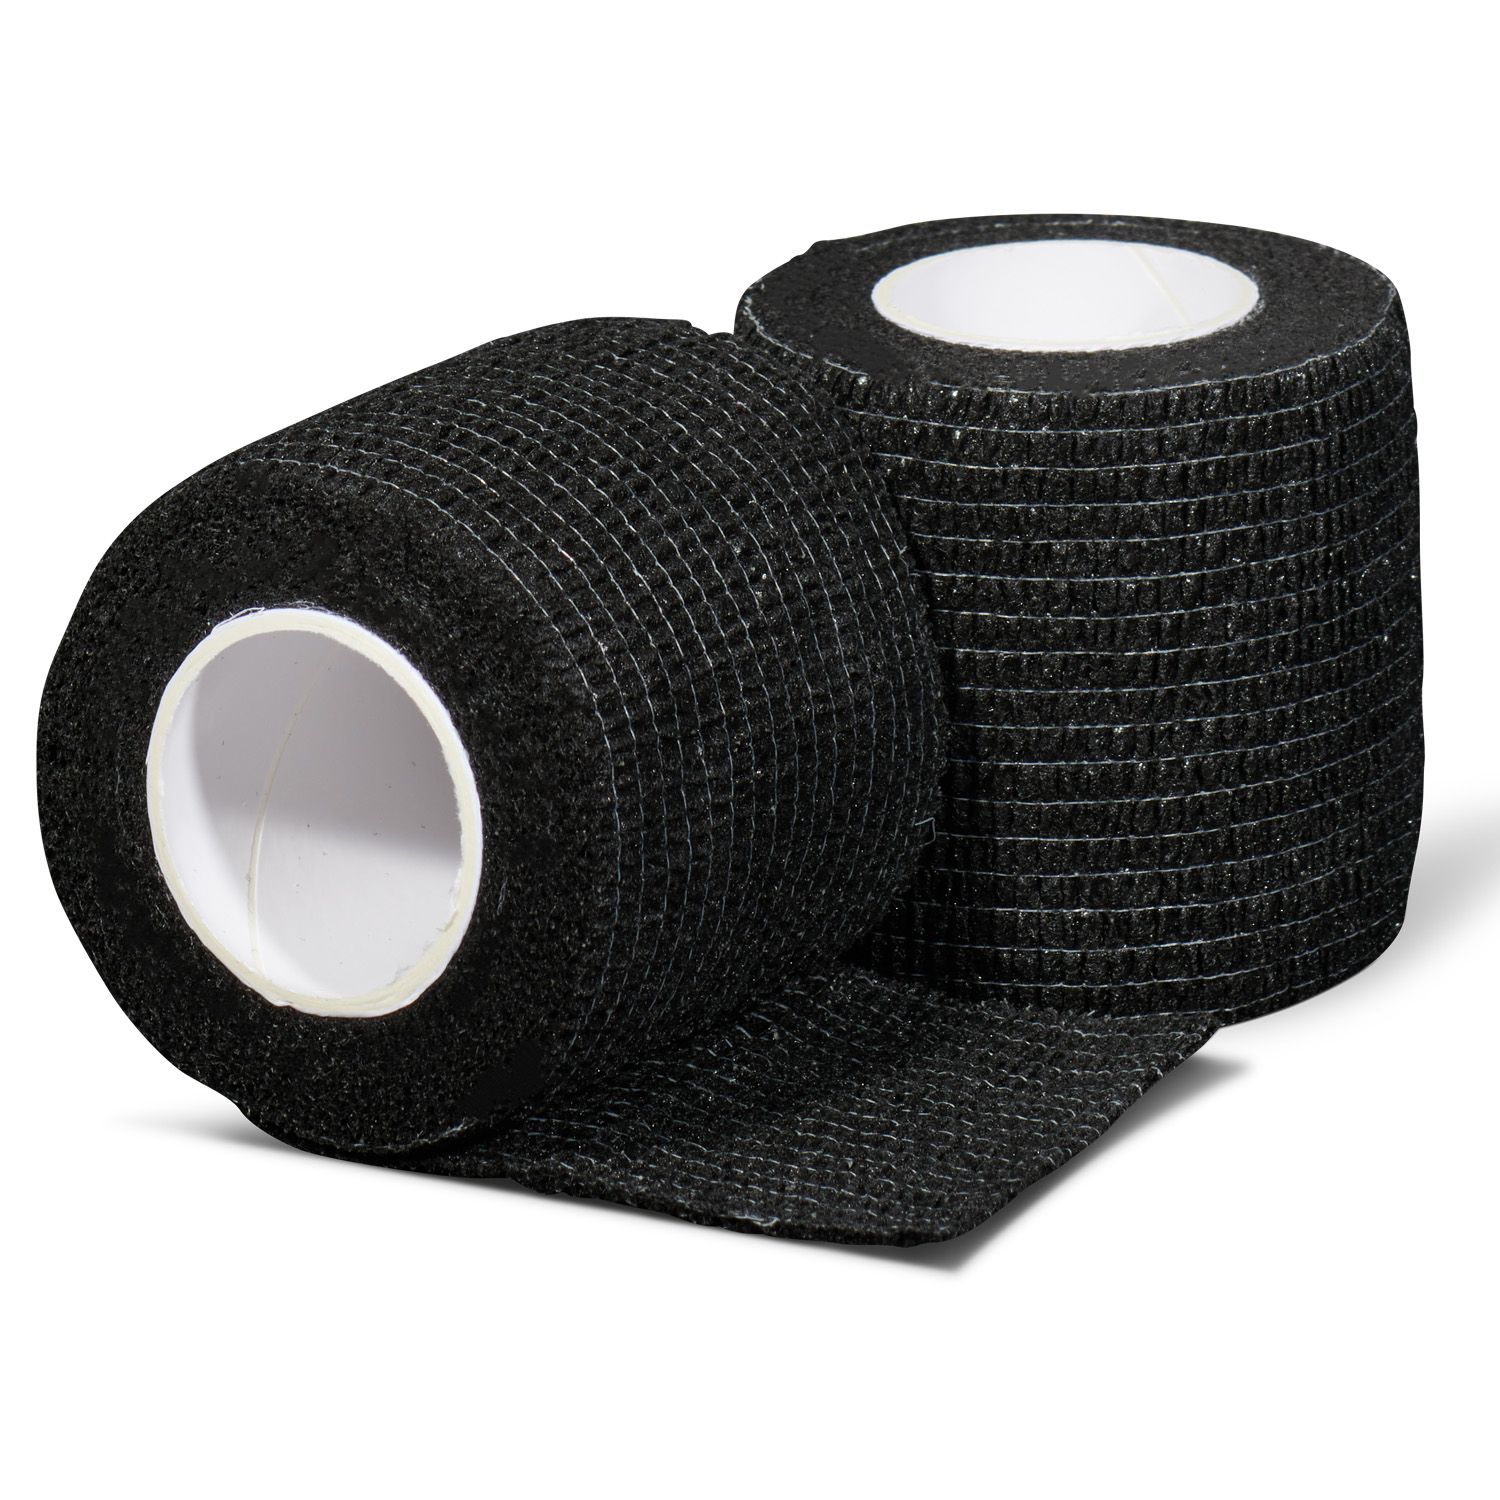 gladiator sports underwrap bandage per roll black